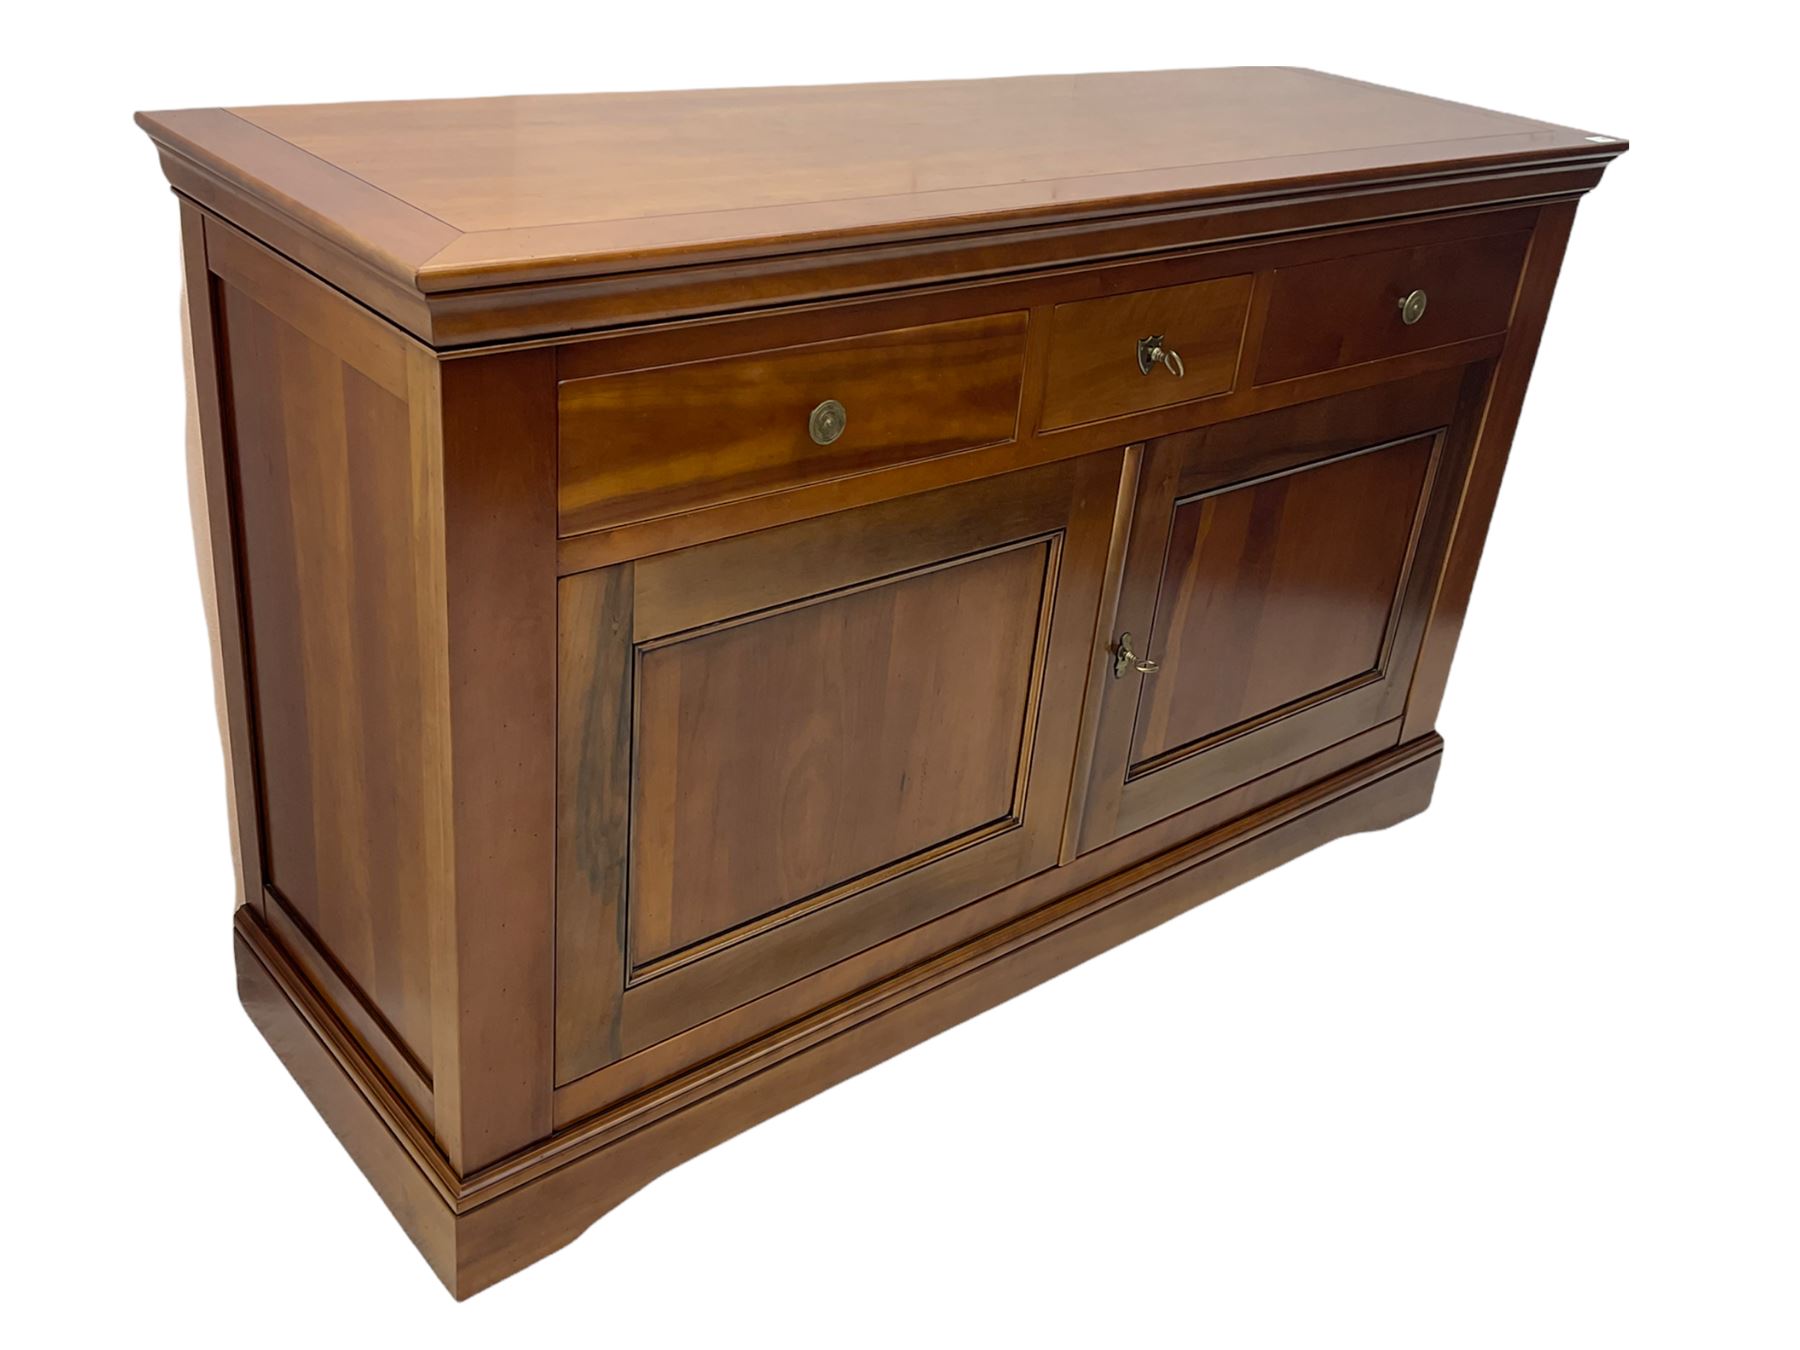 Grange Furniture cherry wood sideboard - Image 4 of 8